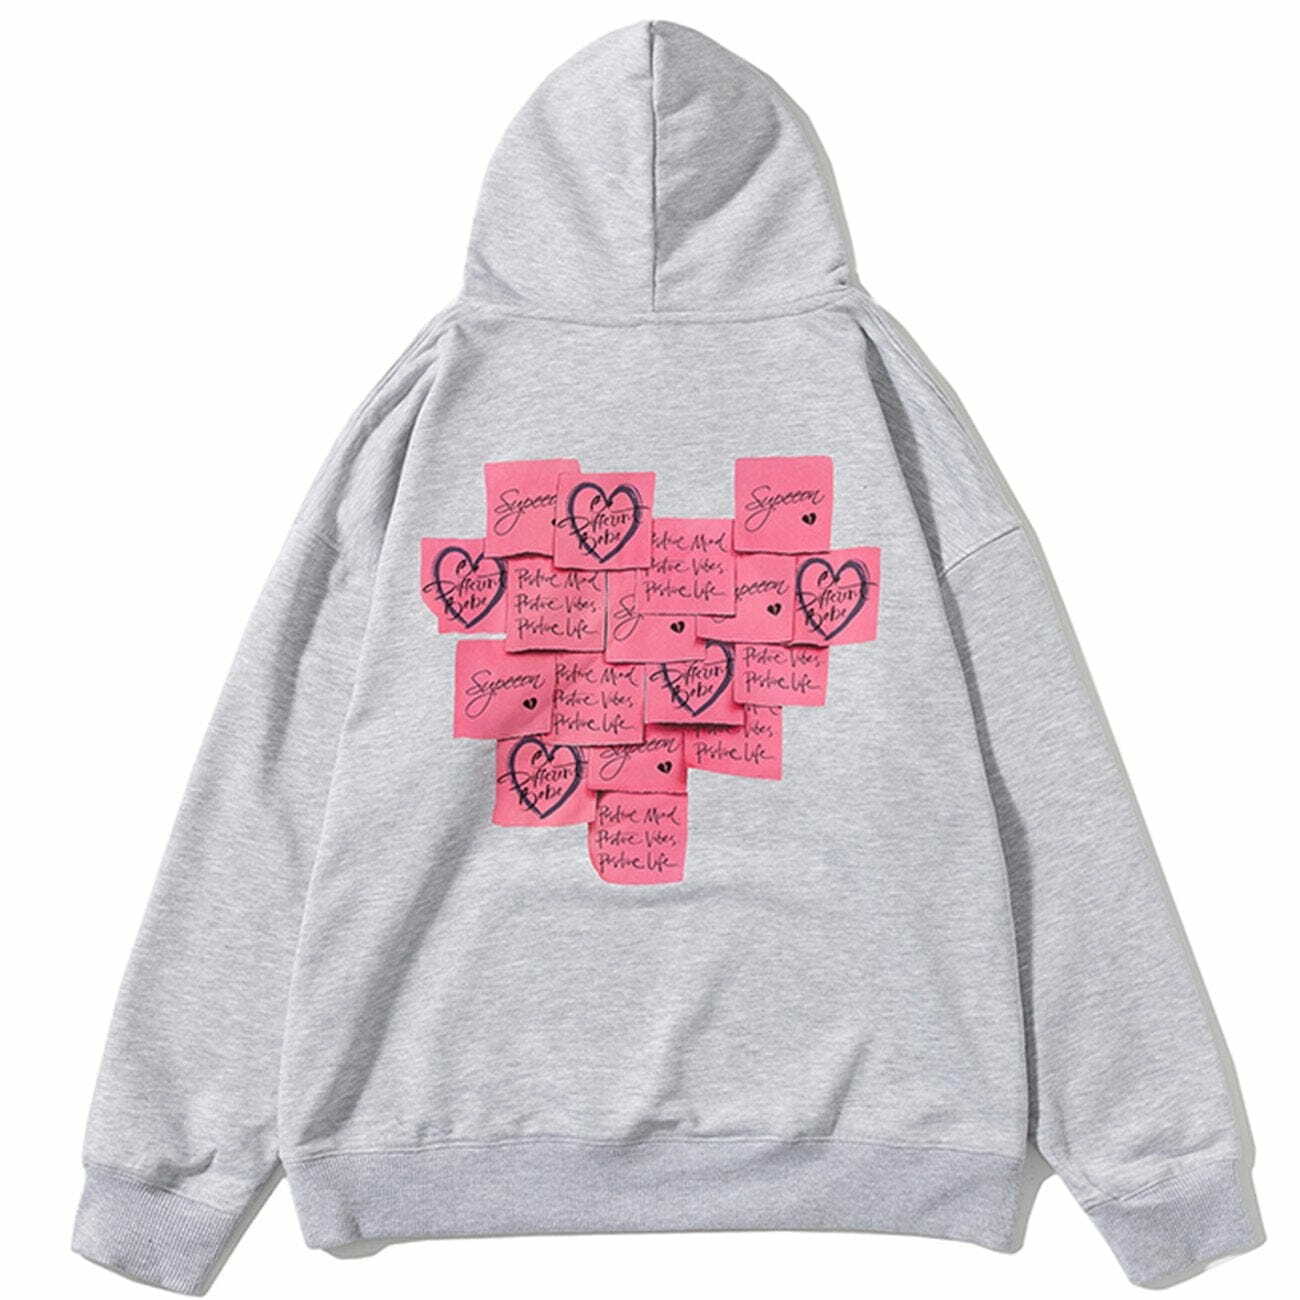 postit note print hoodie quirky & vibrant streetwear 7437